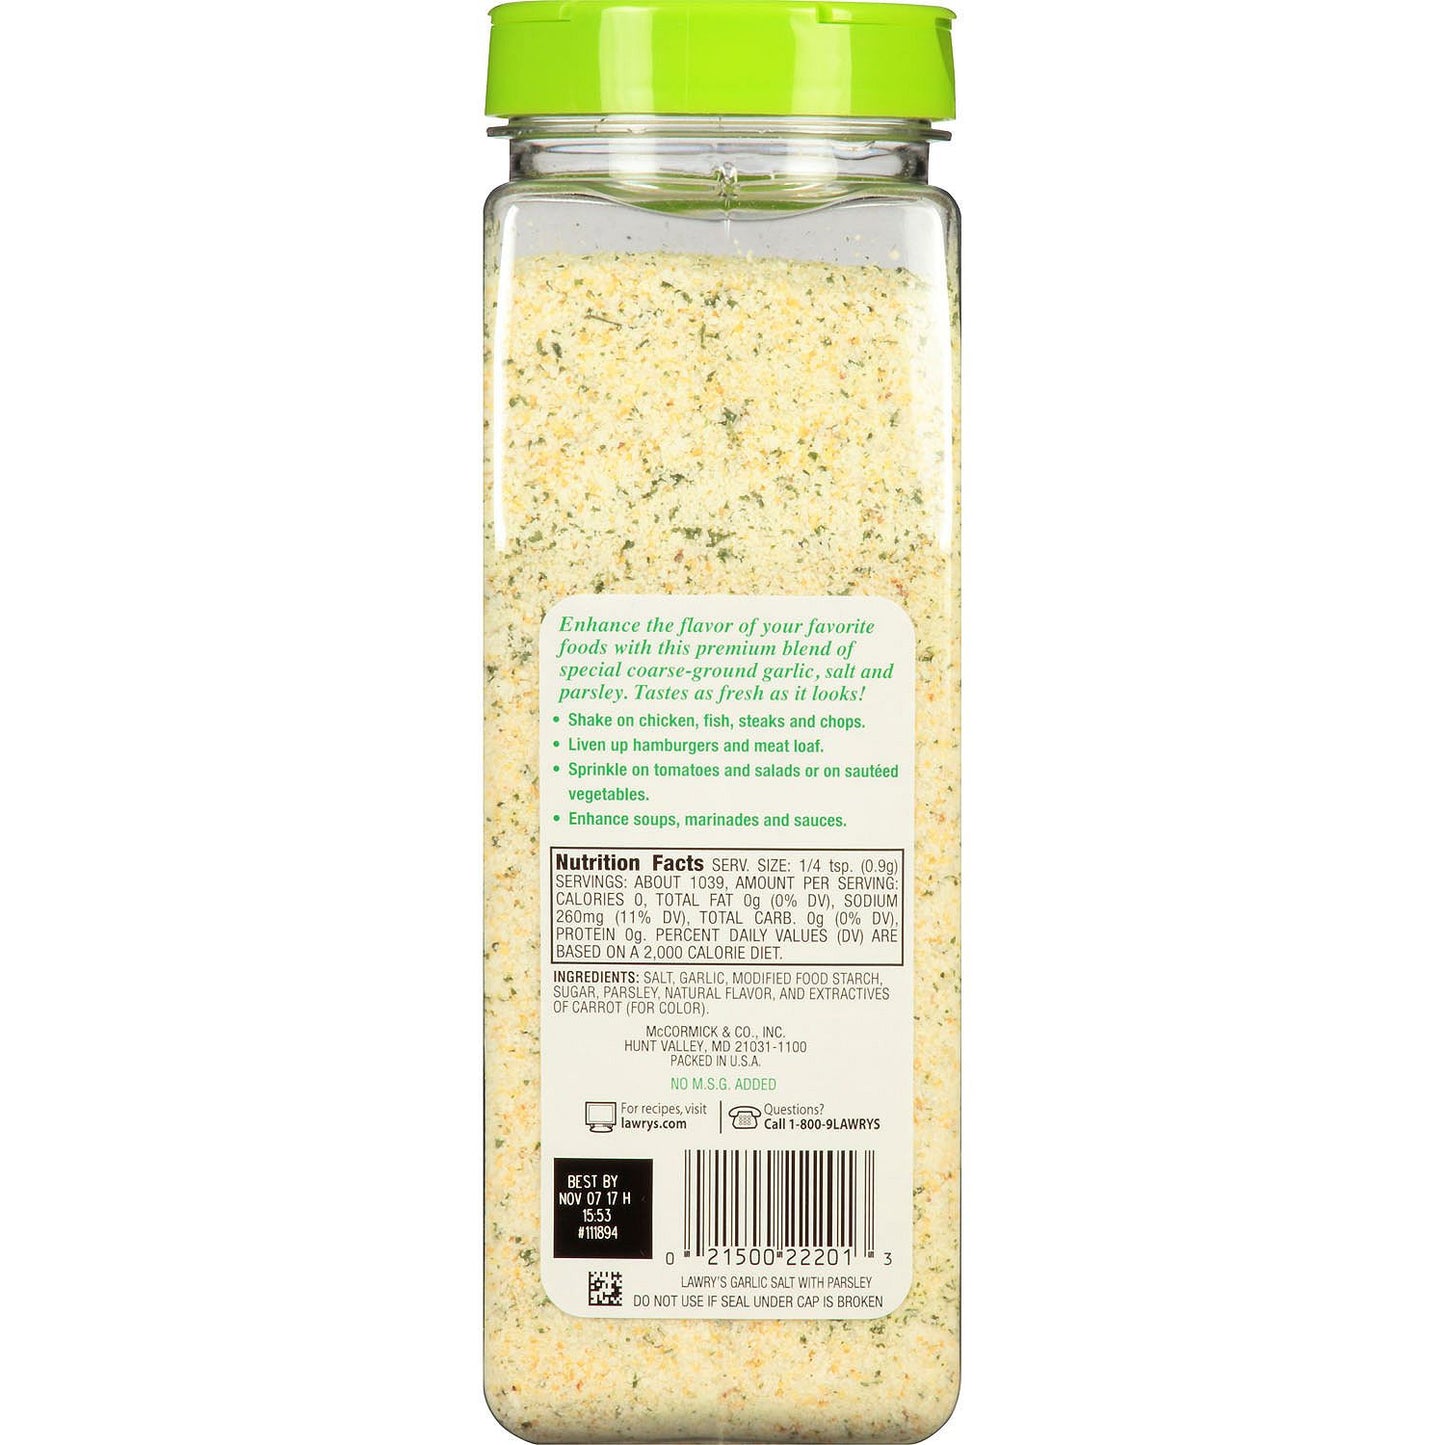 Lawry's Garlic Salt (33 oz.)